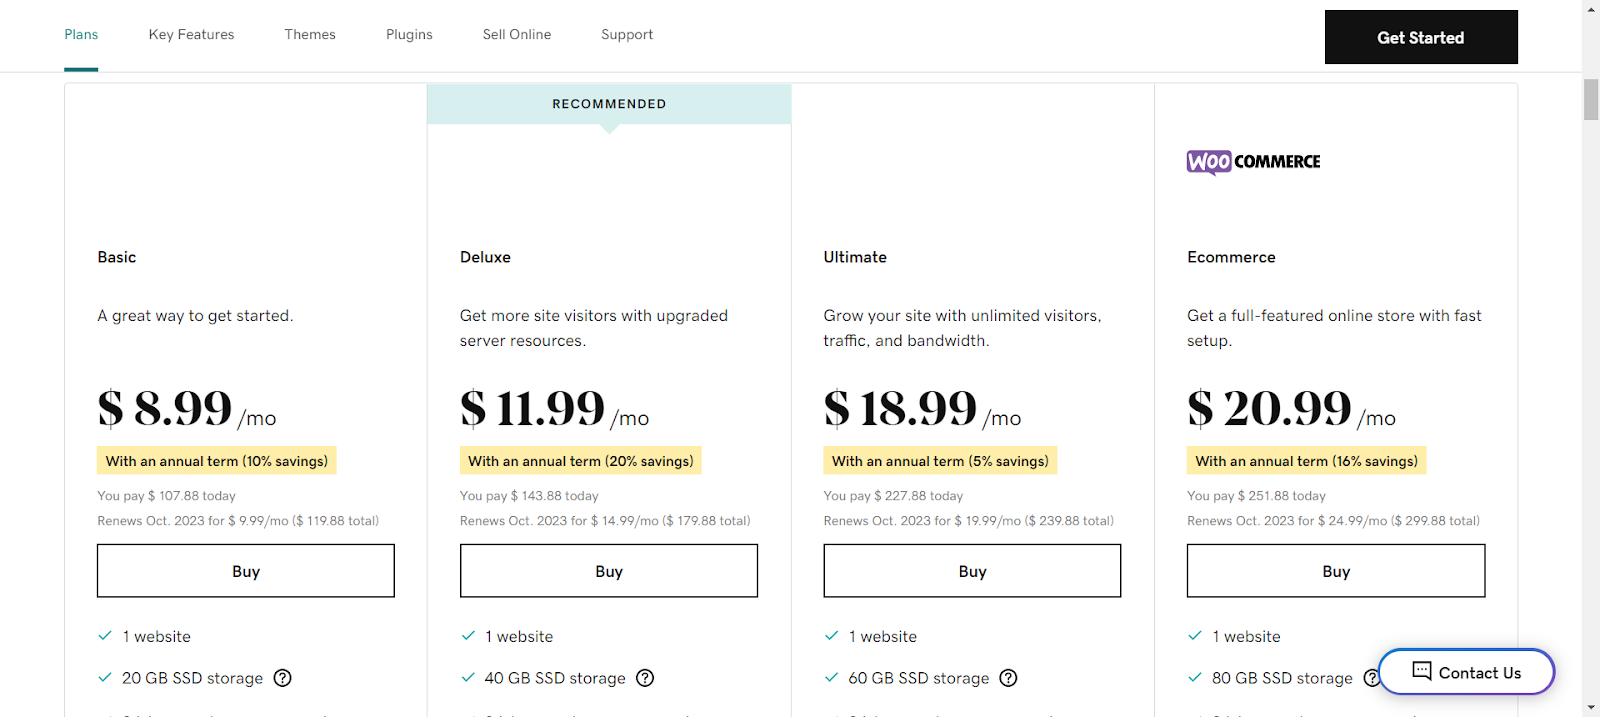 GoDaddy WordPress Hosting Plans and Pricing